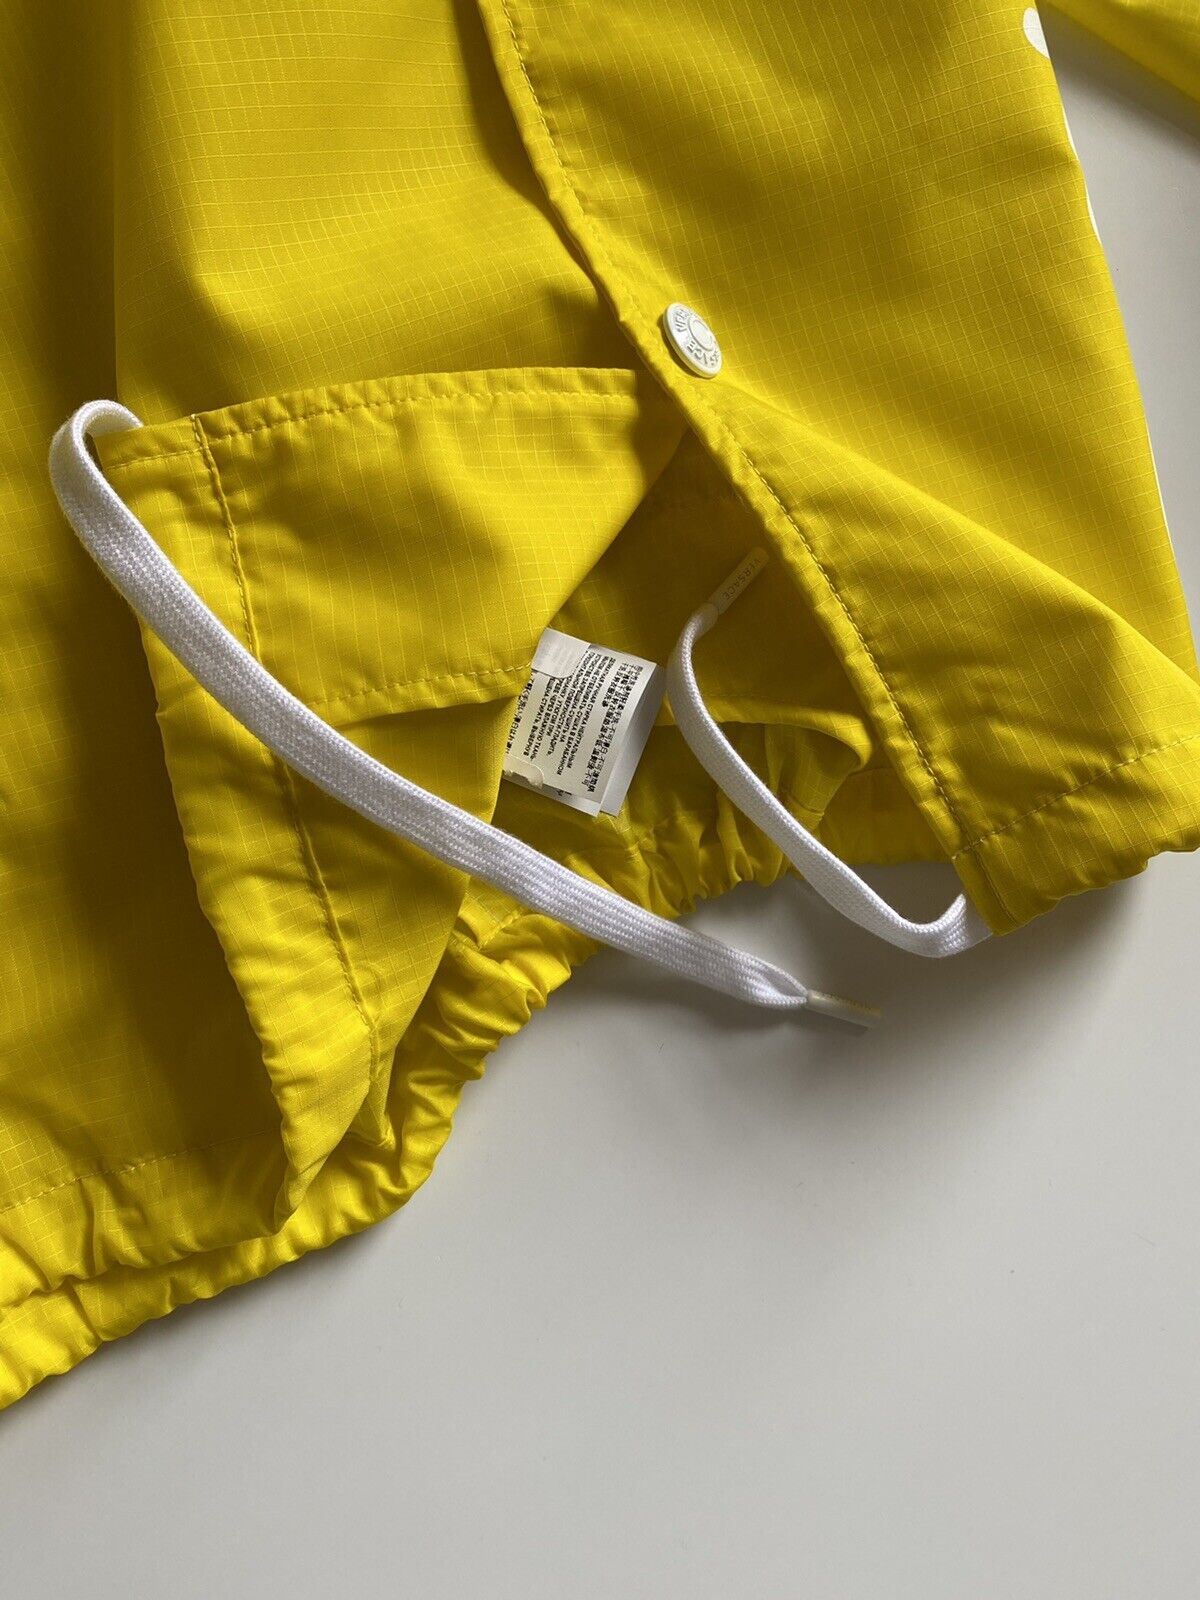 Мужской желтый плащ на пуговицах Versace NWT $1150 L (50 евро) A85203 IT 